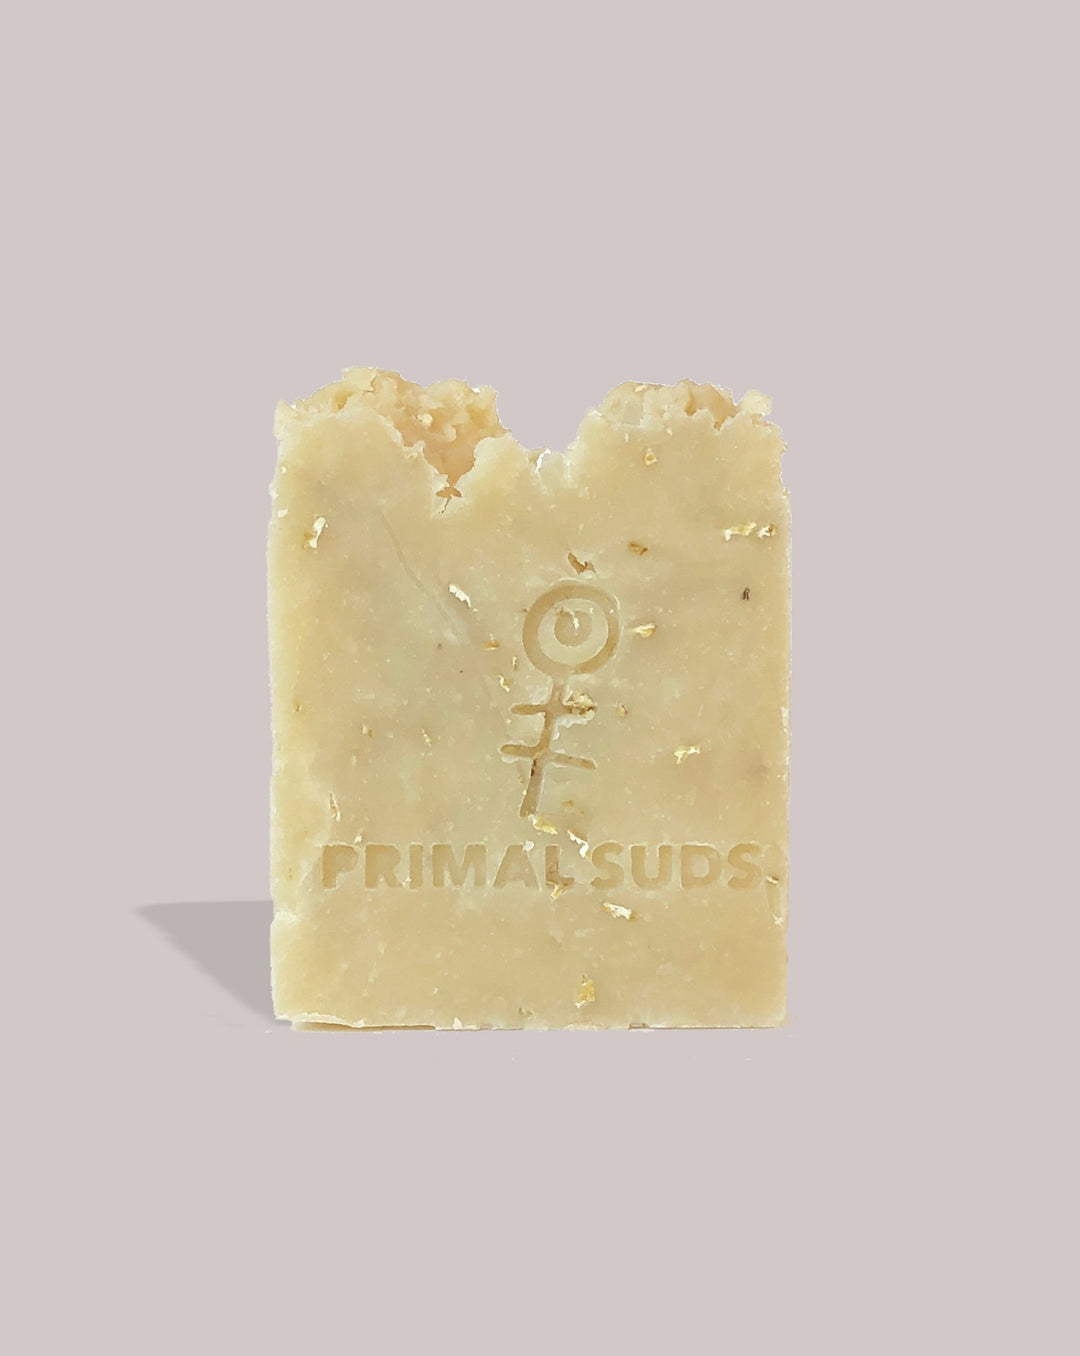 PRIMAL SUDS SOAP BAR Freshcobar Handmade Soap